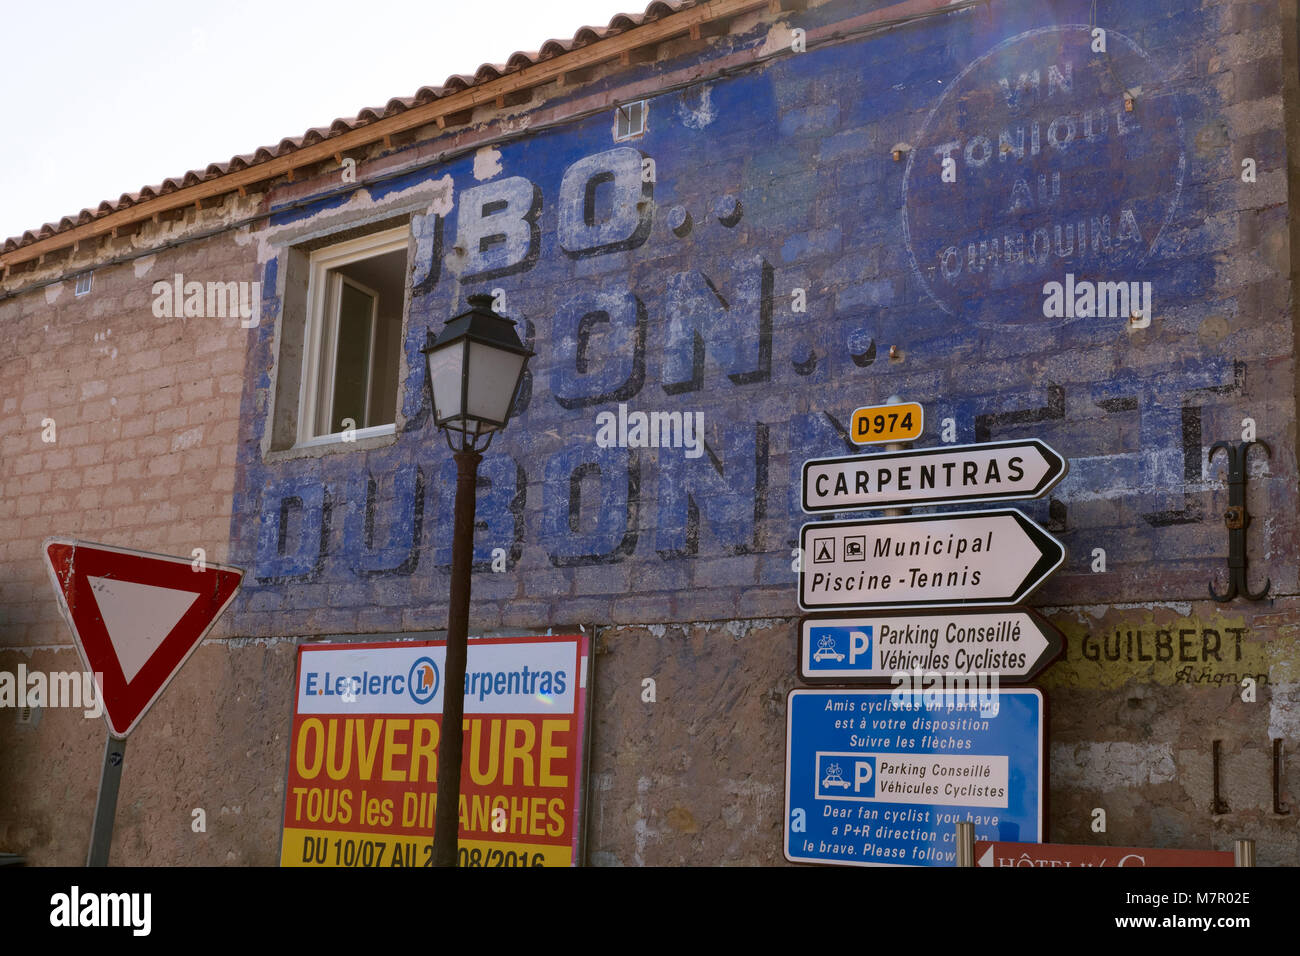 Old Dubonet advert in Bedoin Provence France Stock Photo